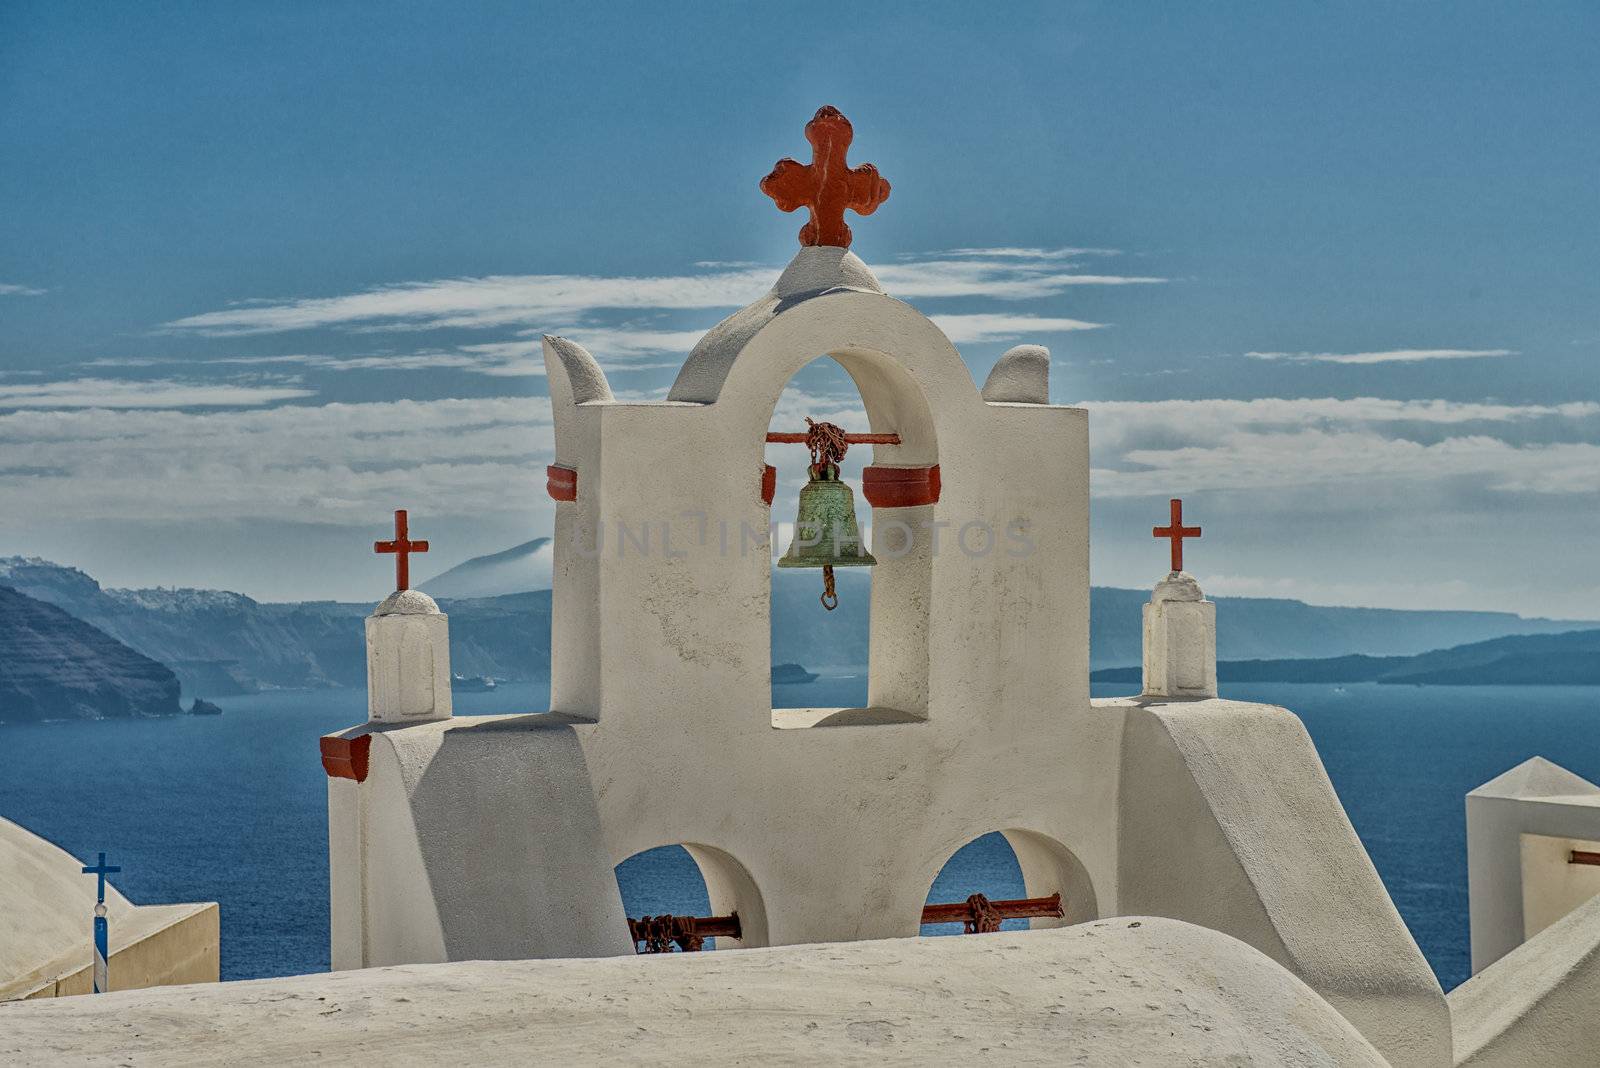 Santorini church by Alenmax